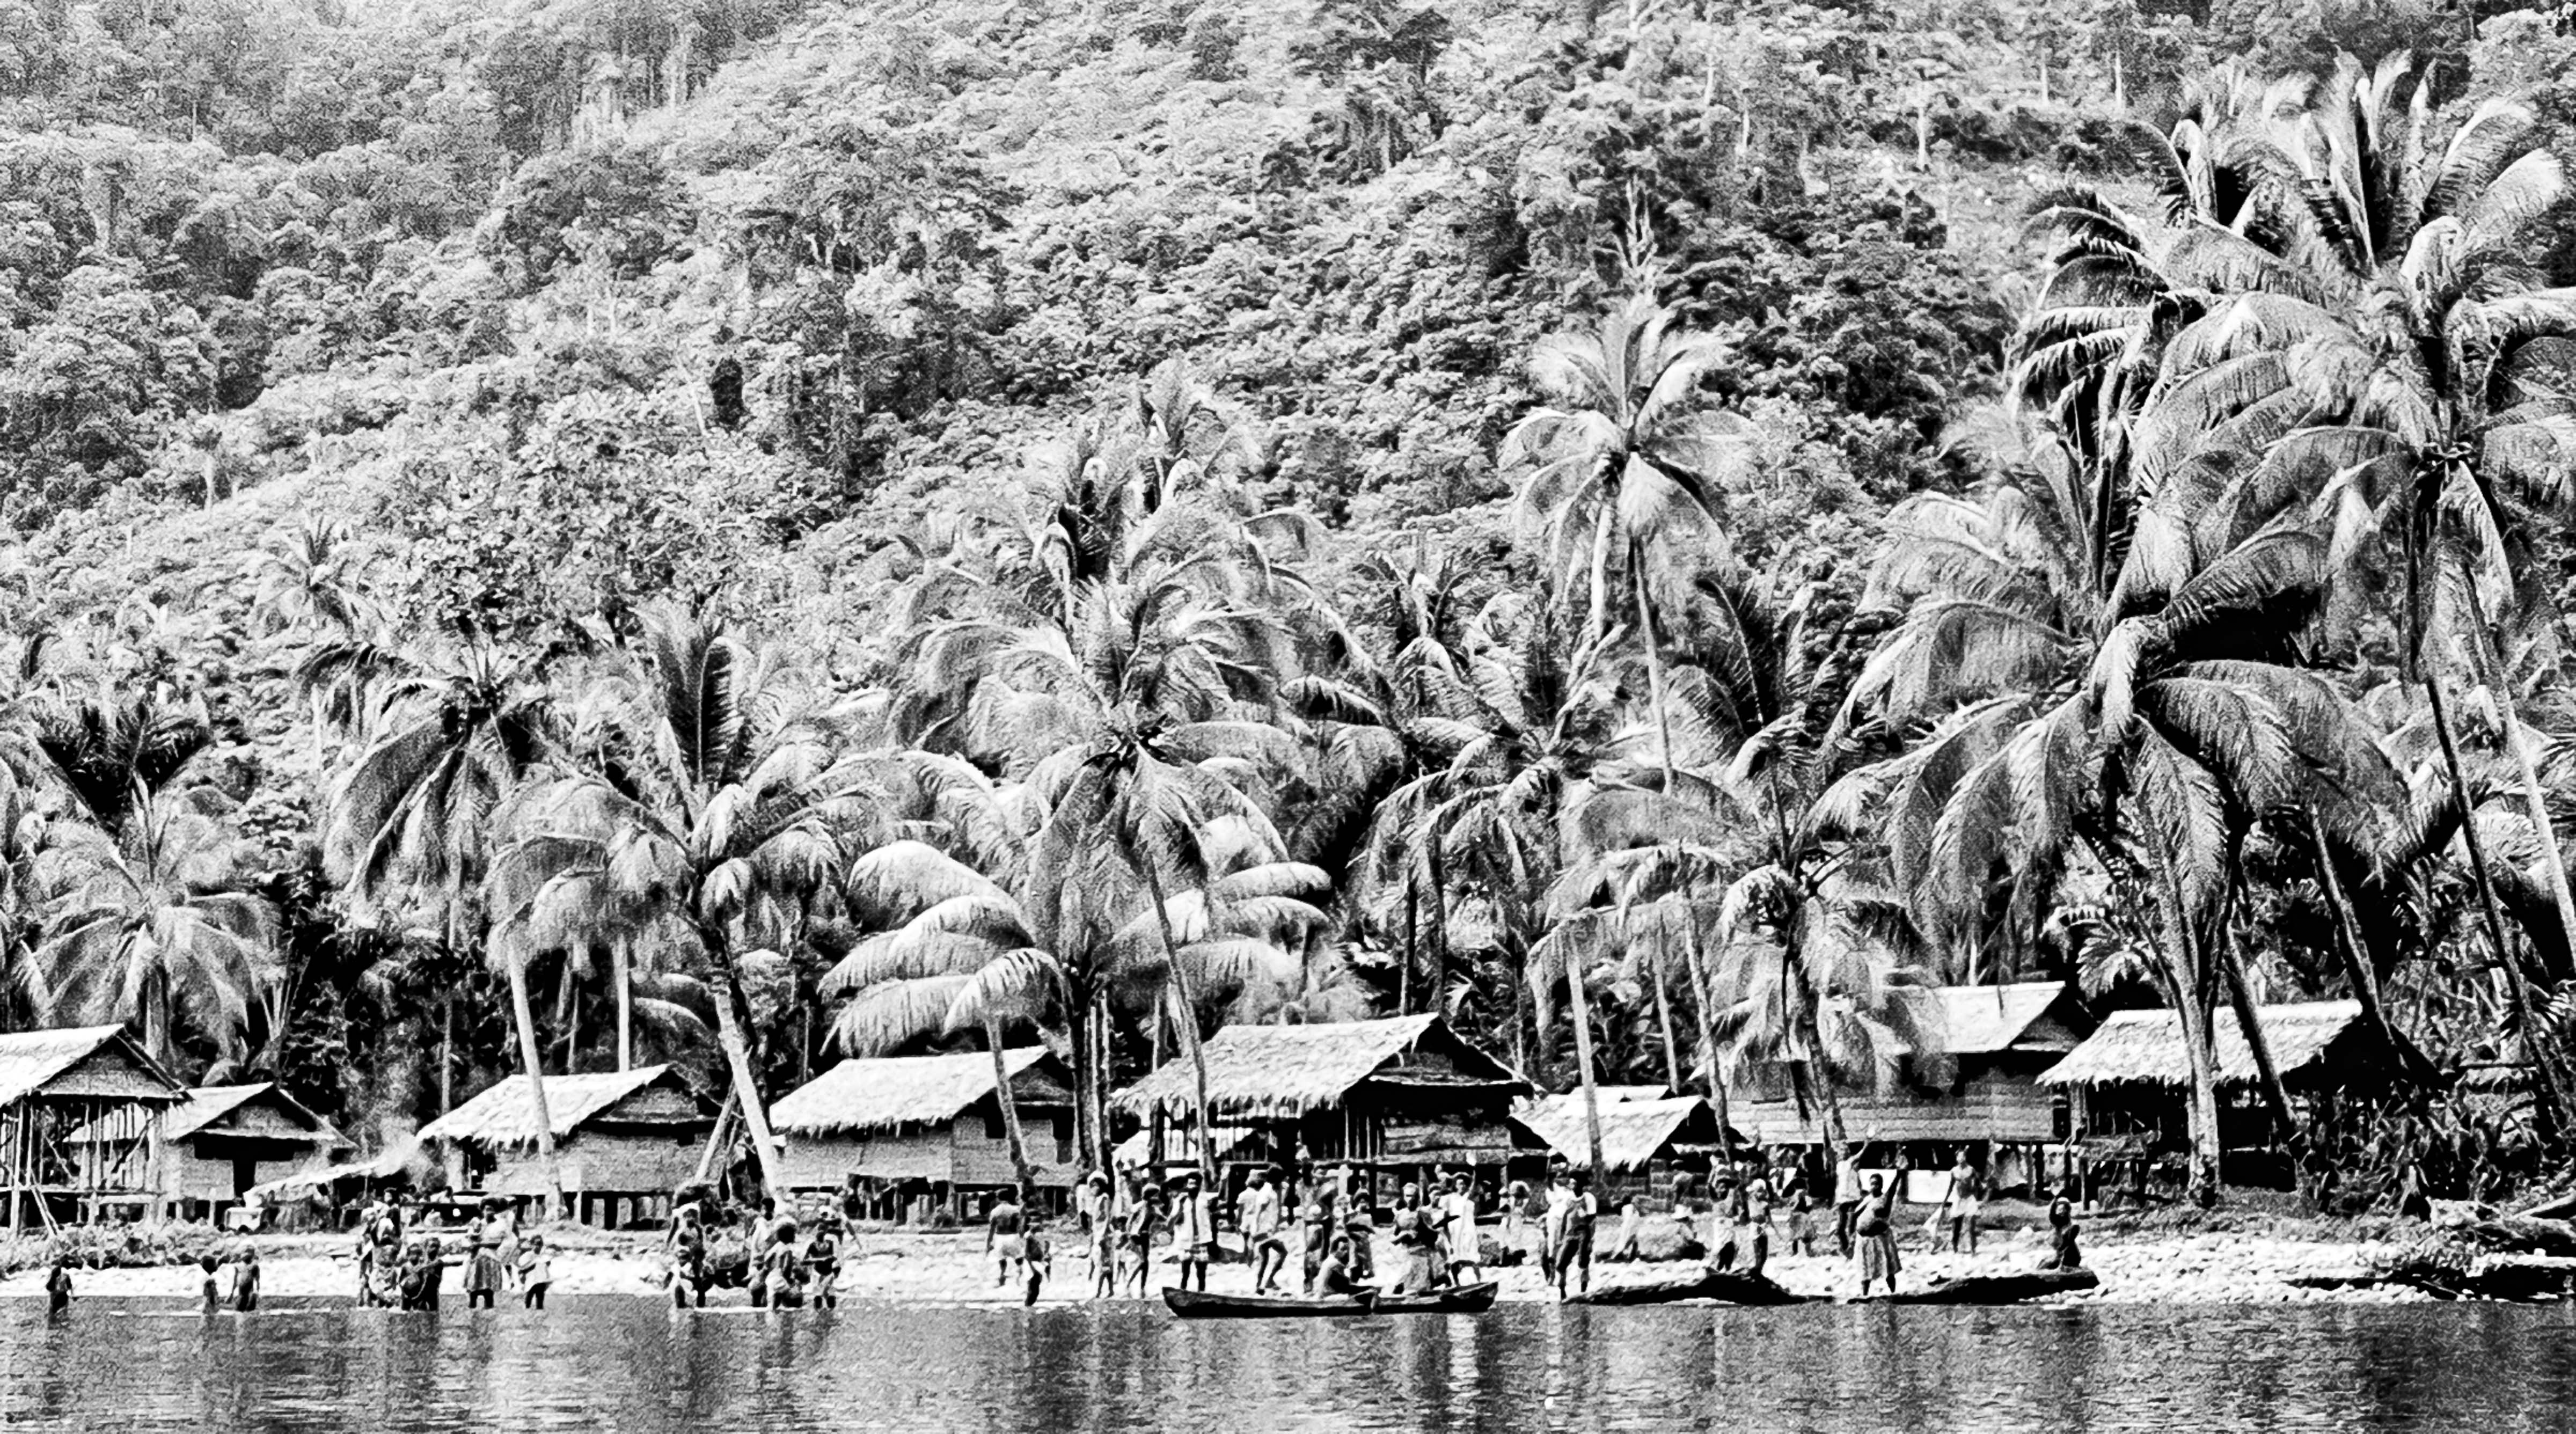 Solomon Islands, Our Departure From Ngarringnasuru, 1982